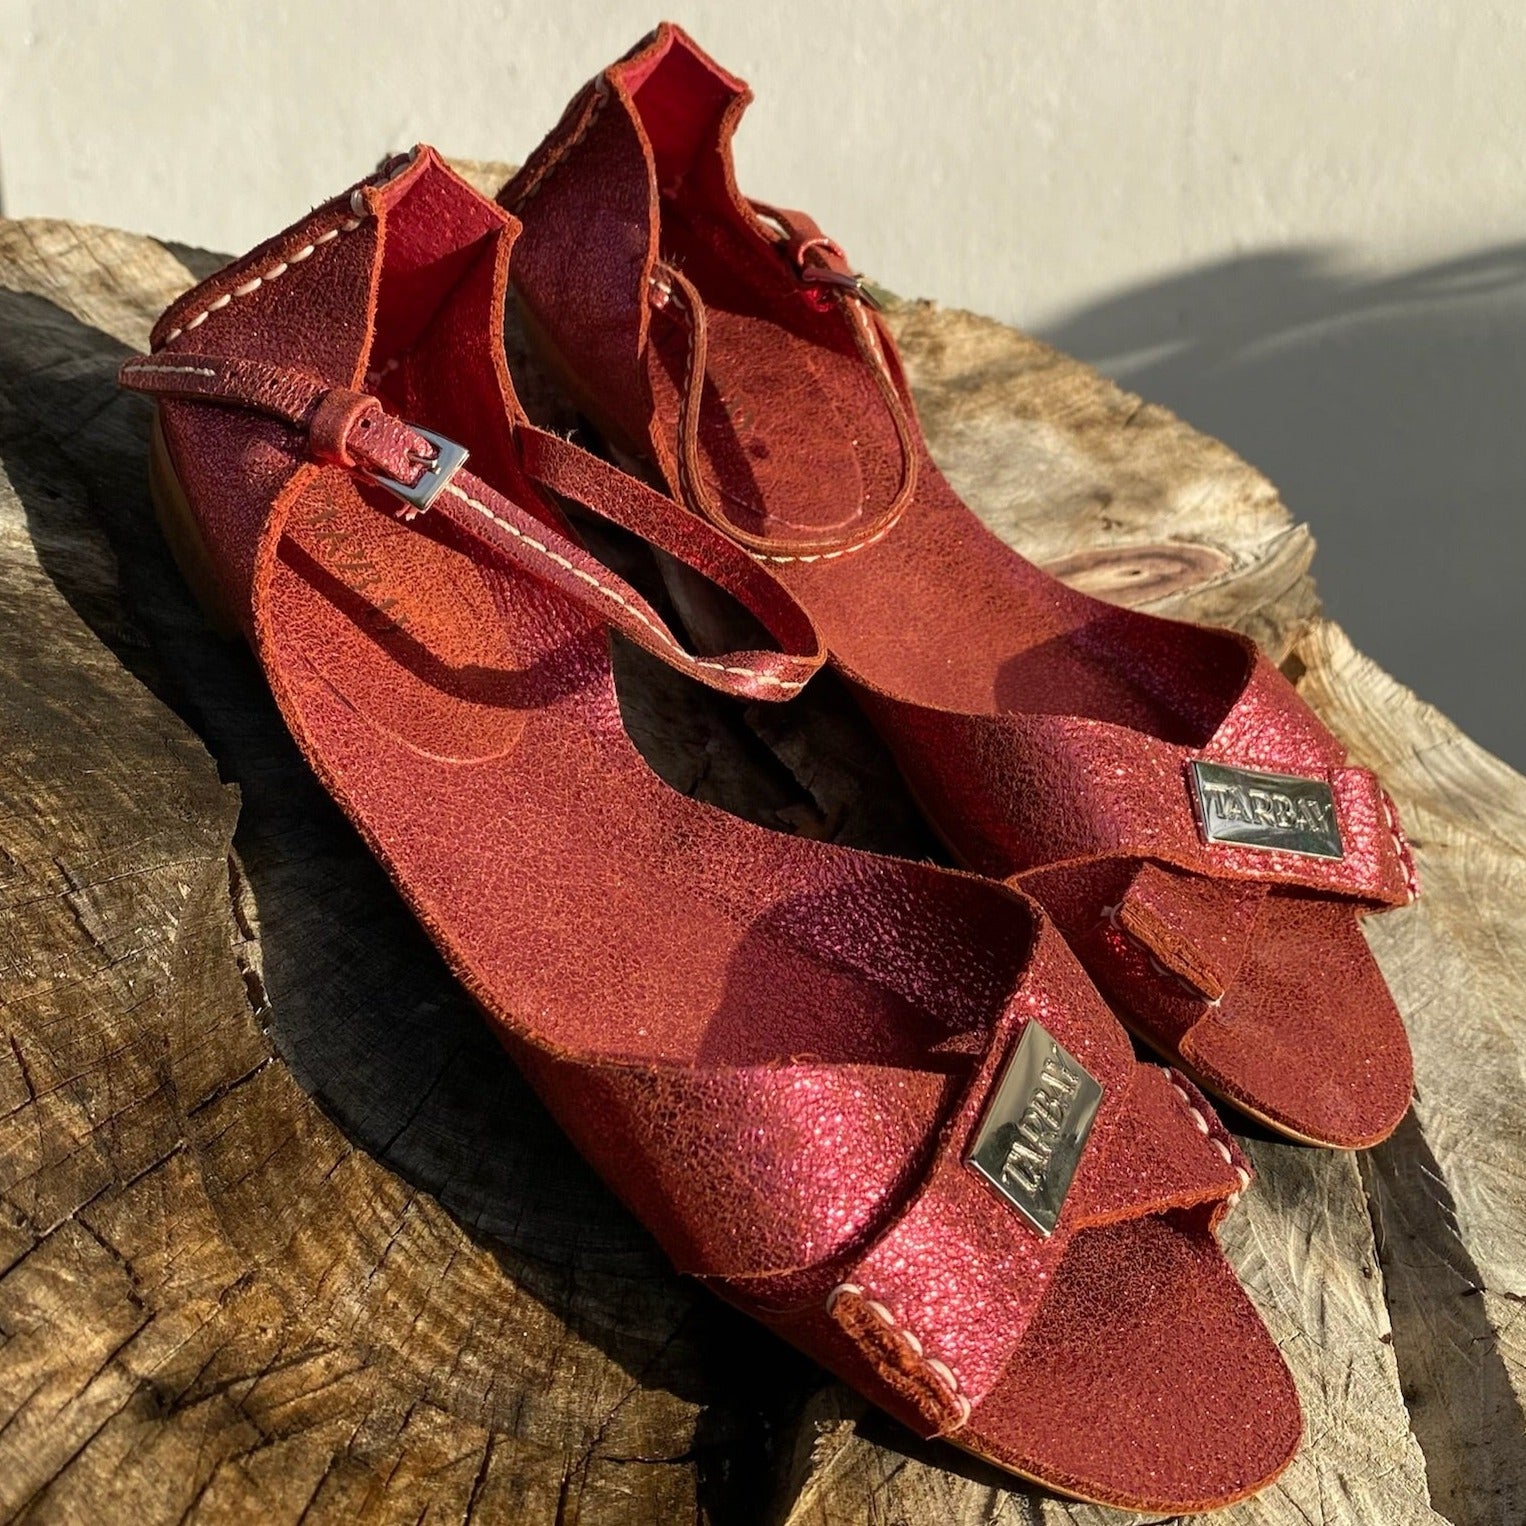 Tajali Leather Sandals - Metallic Cherry Flats TARBAY   